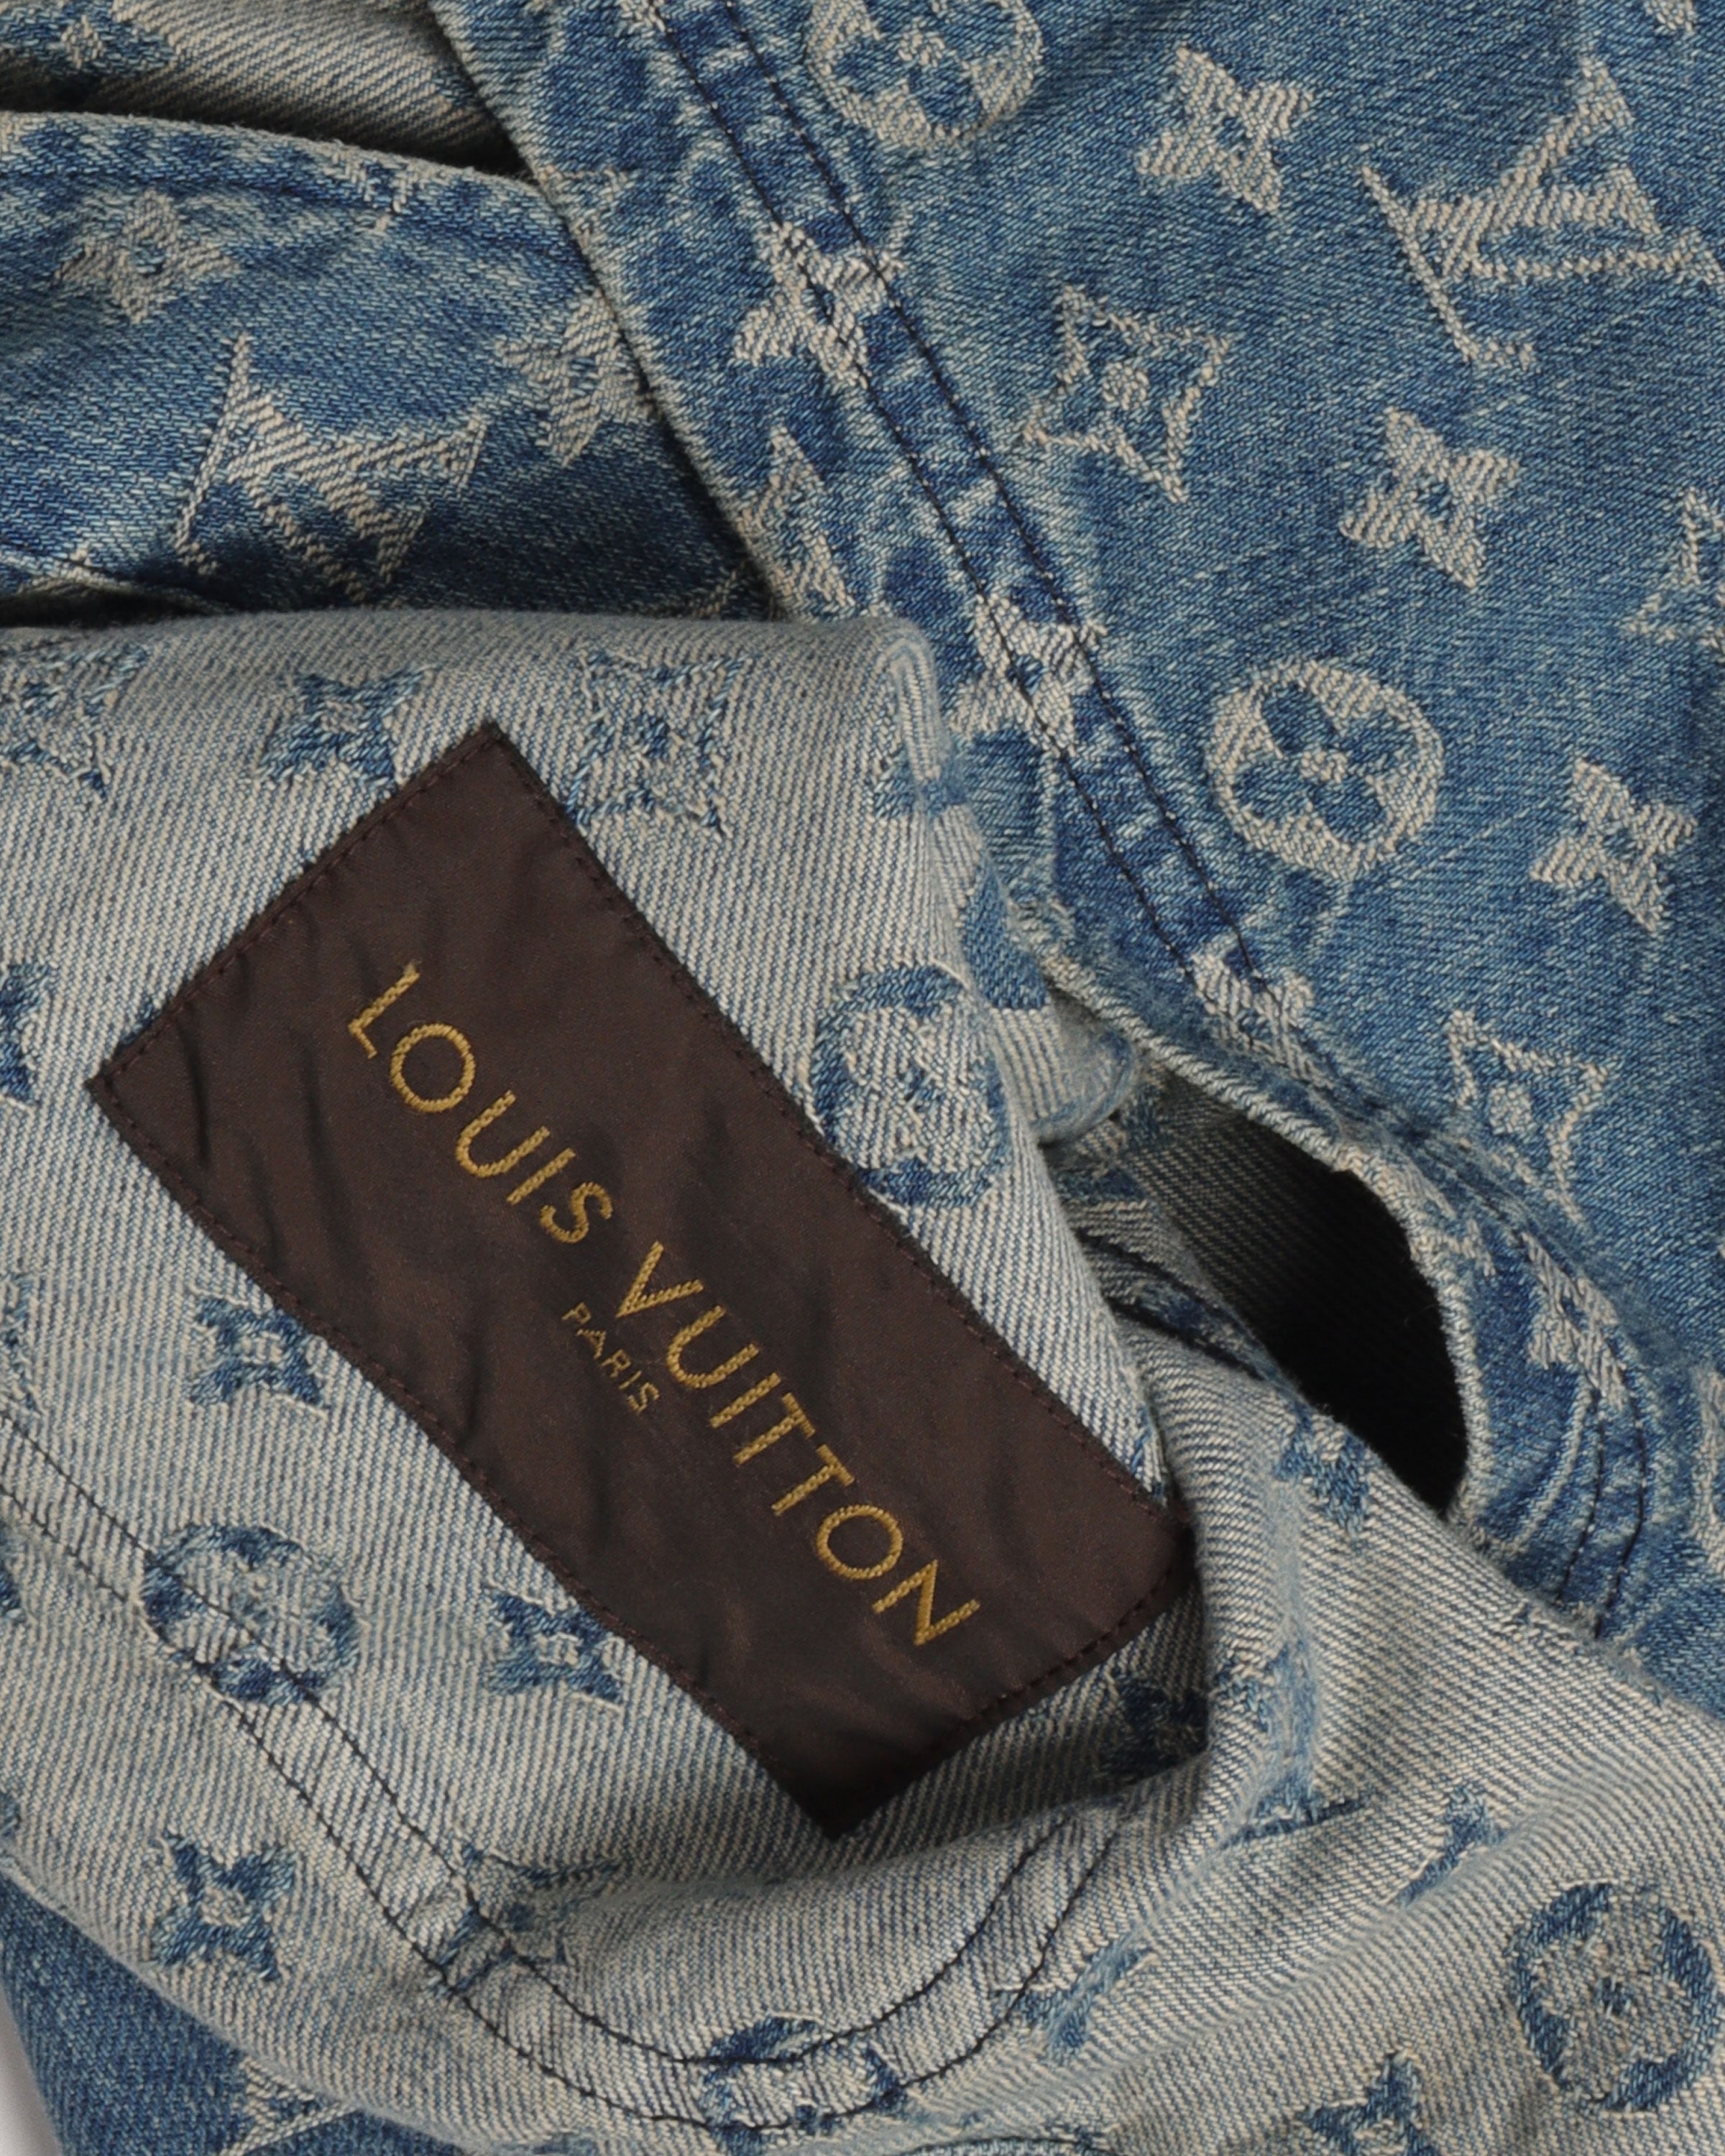 Supreme x Louis Vuitton Jacquard Denim Chore Coat